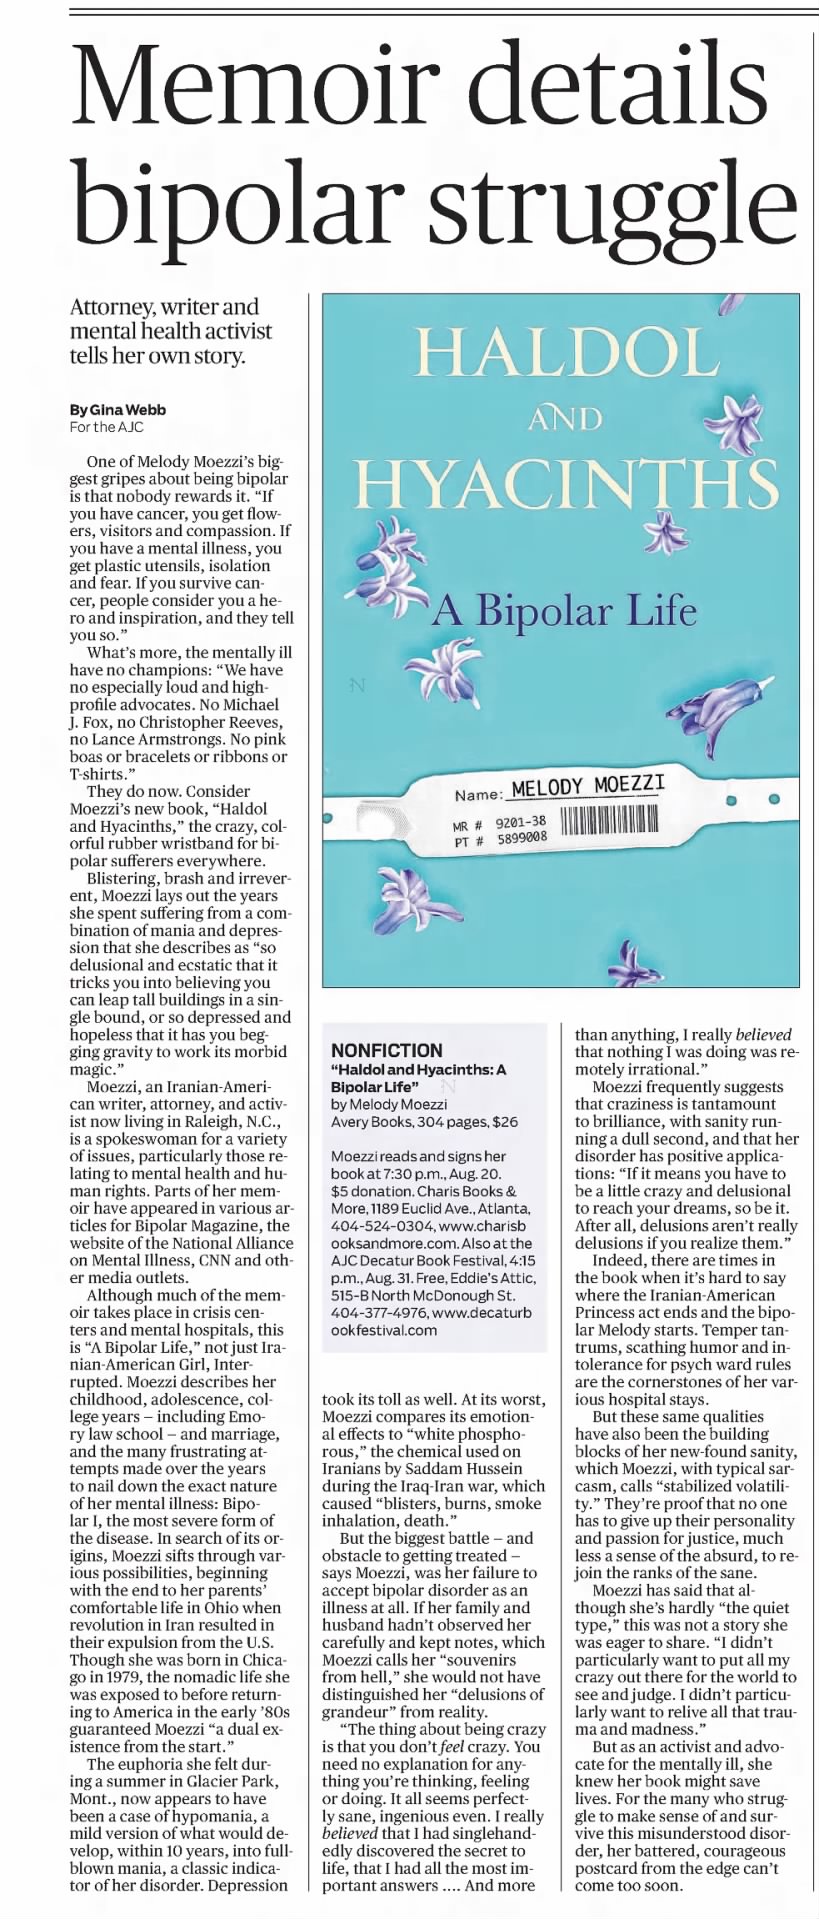 Memoir details bipolar struggle - "Haldol and Hyacinths" by Melody Moezzi